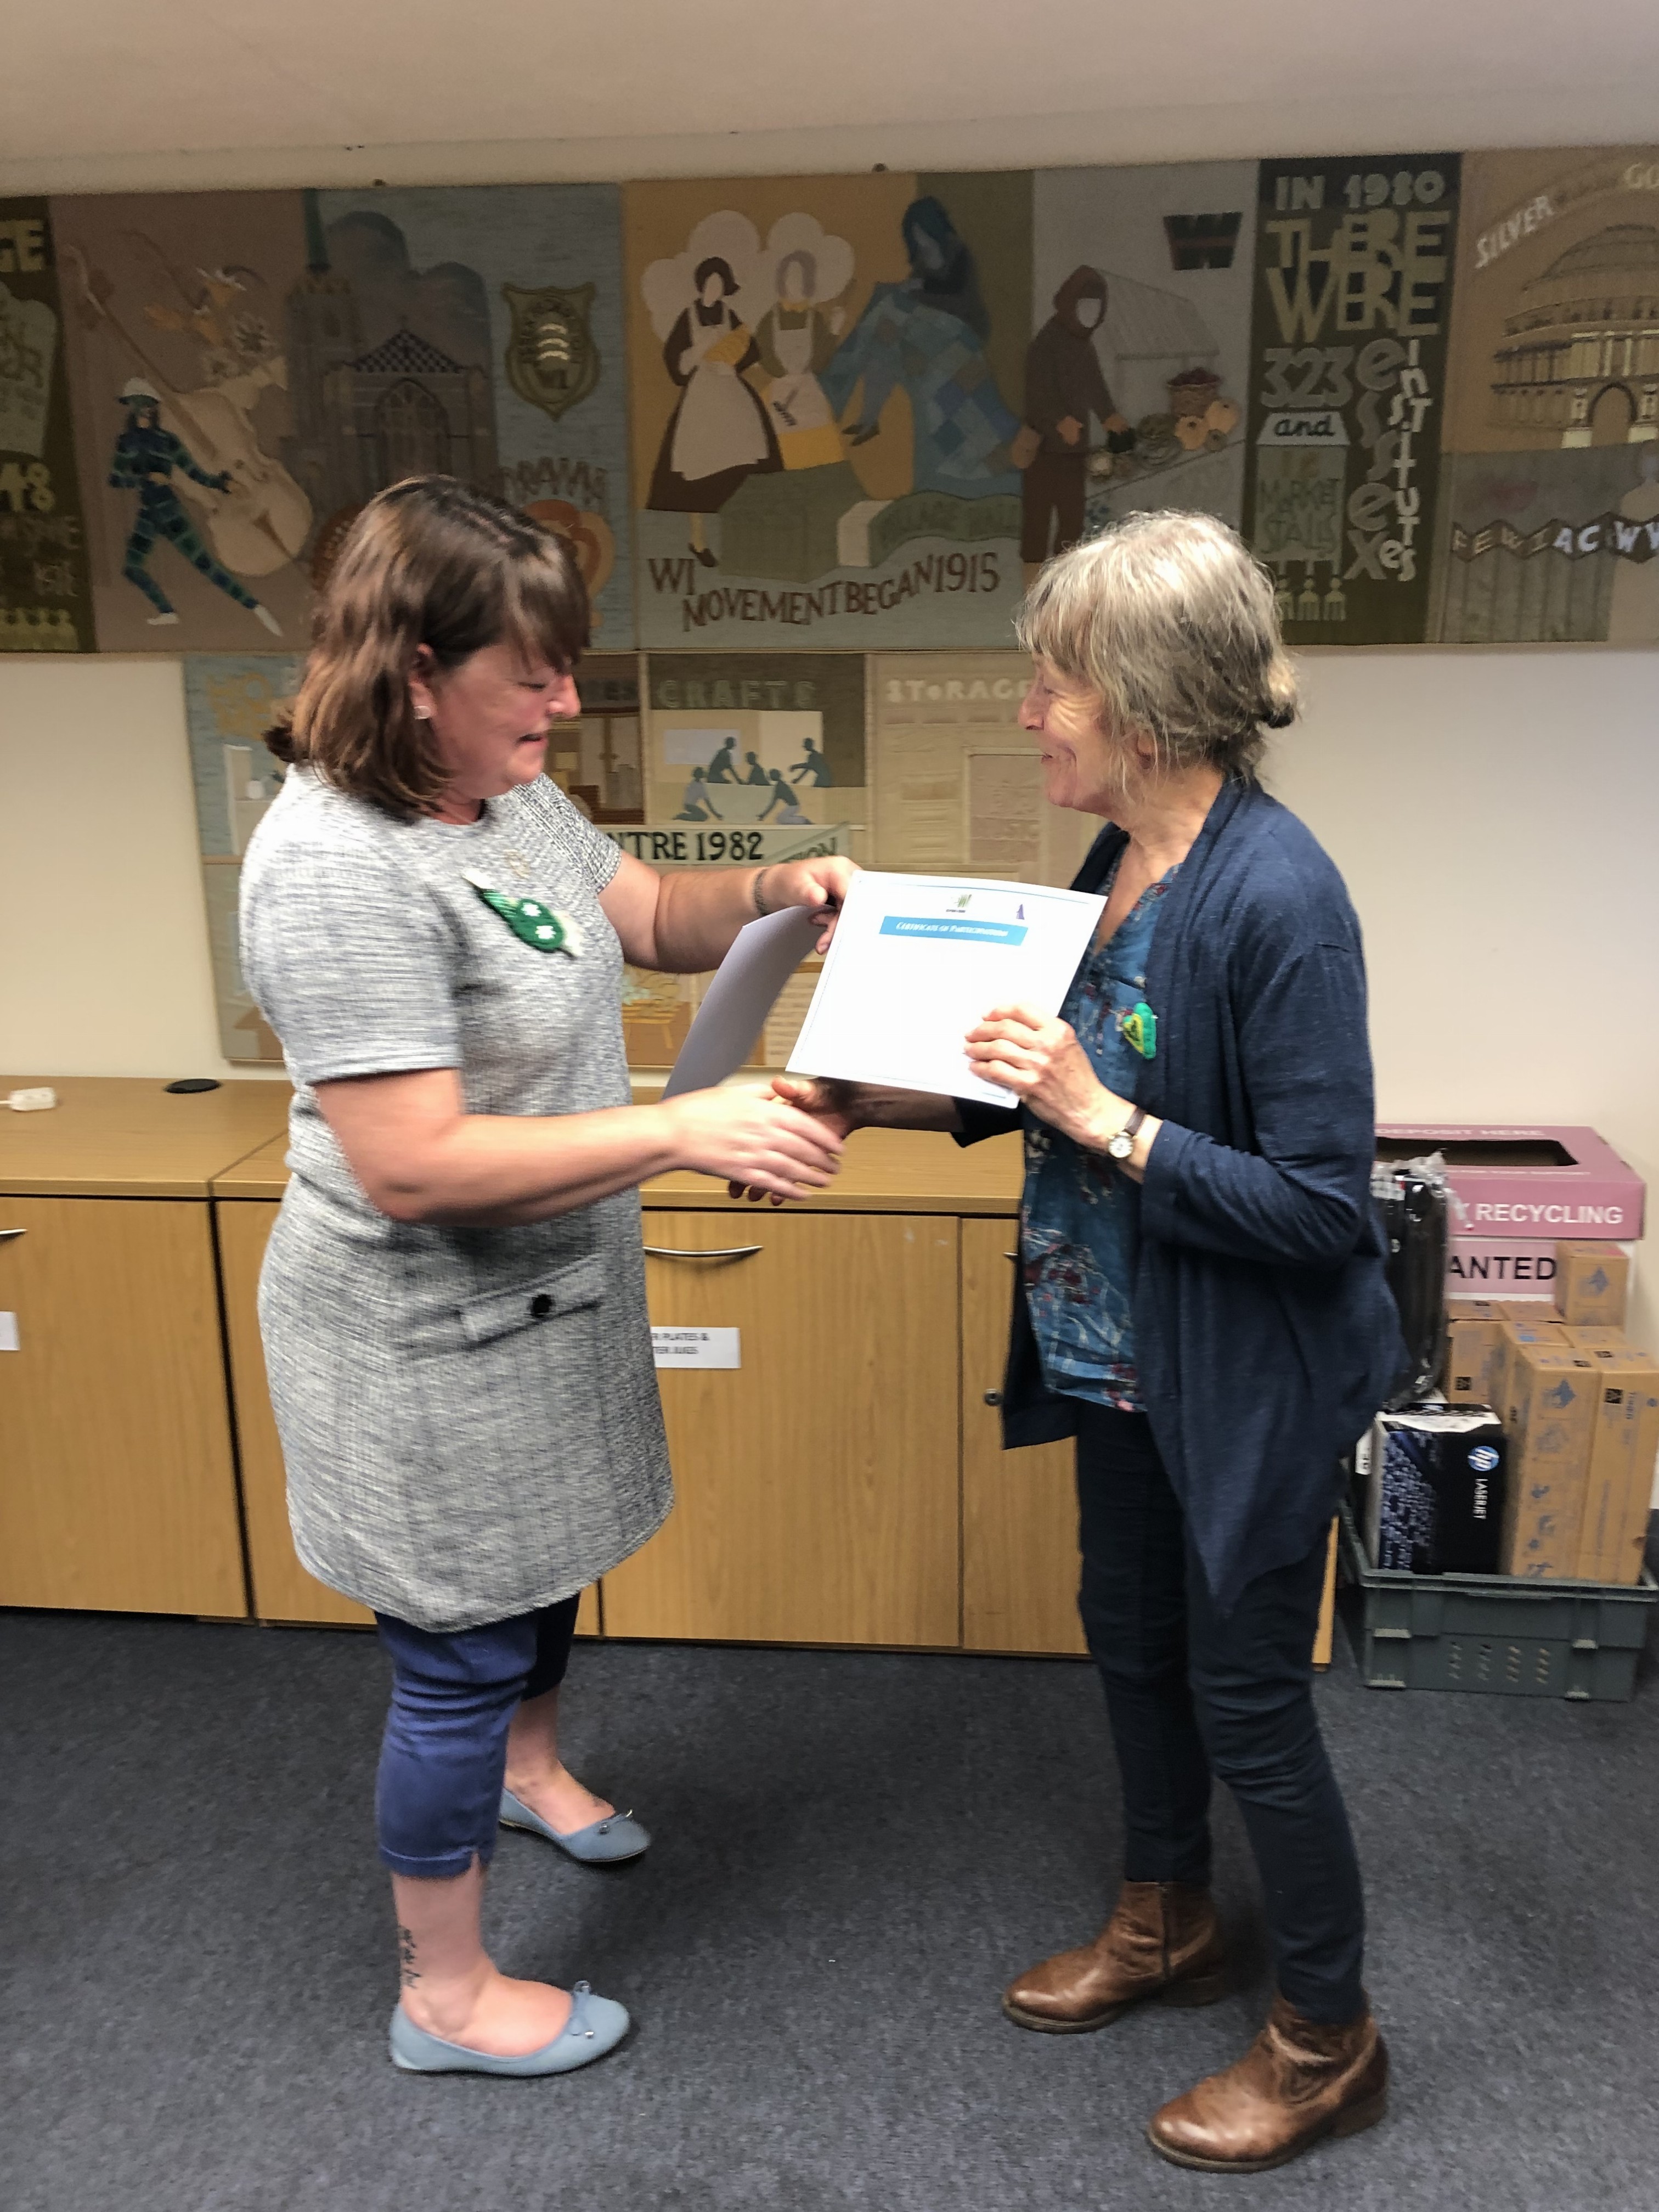 essex womens institute climate ambassador receiving certificate